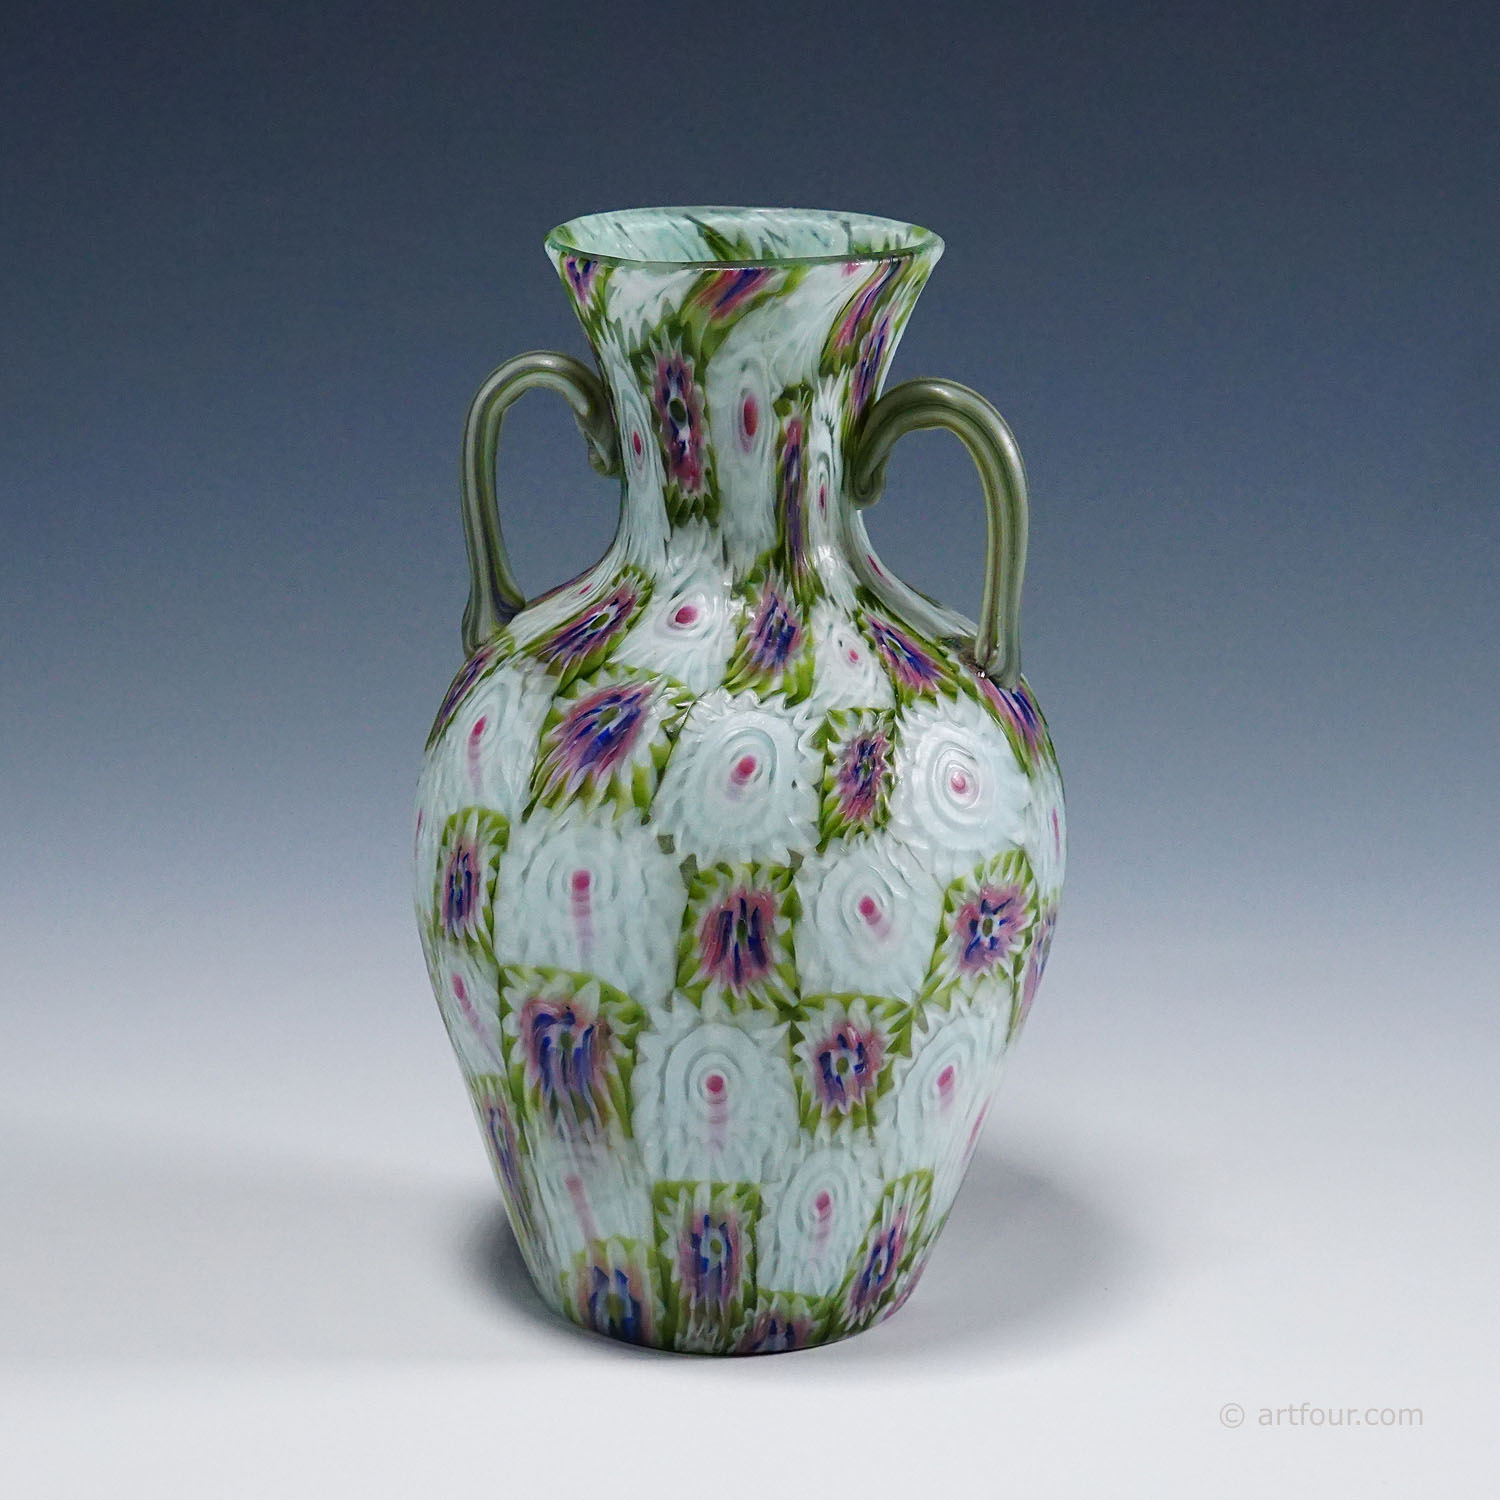 Antique Murrine Vase with Handles, Fratelli Toso Murano ca. 1920s